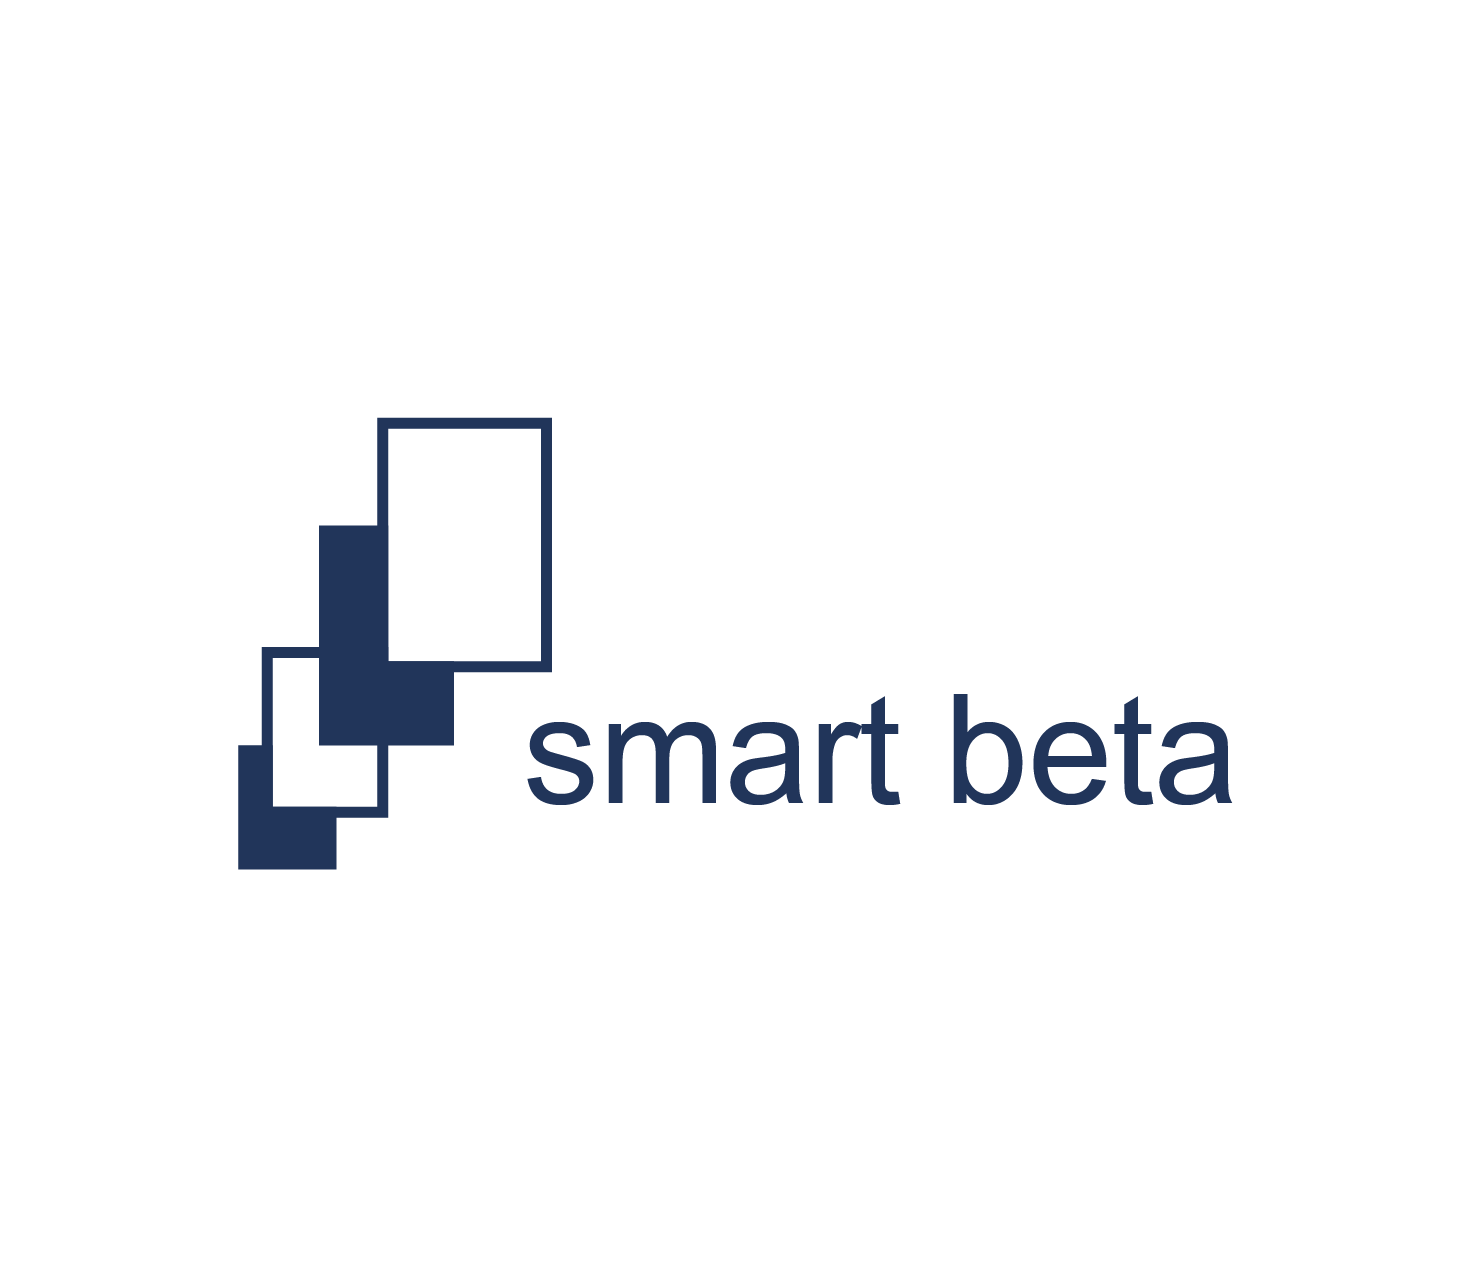 smart beta logo-01